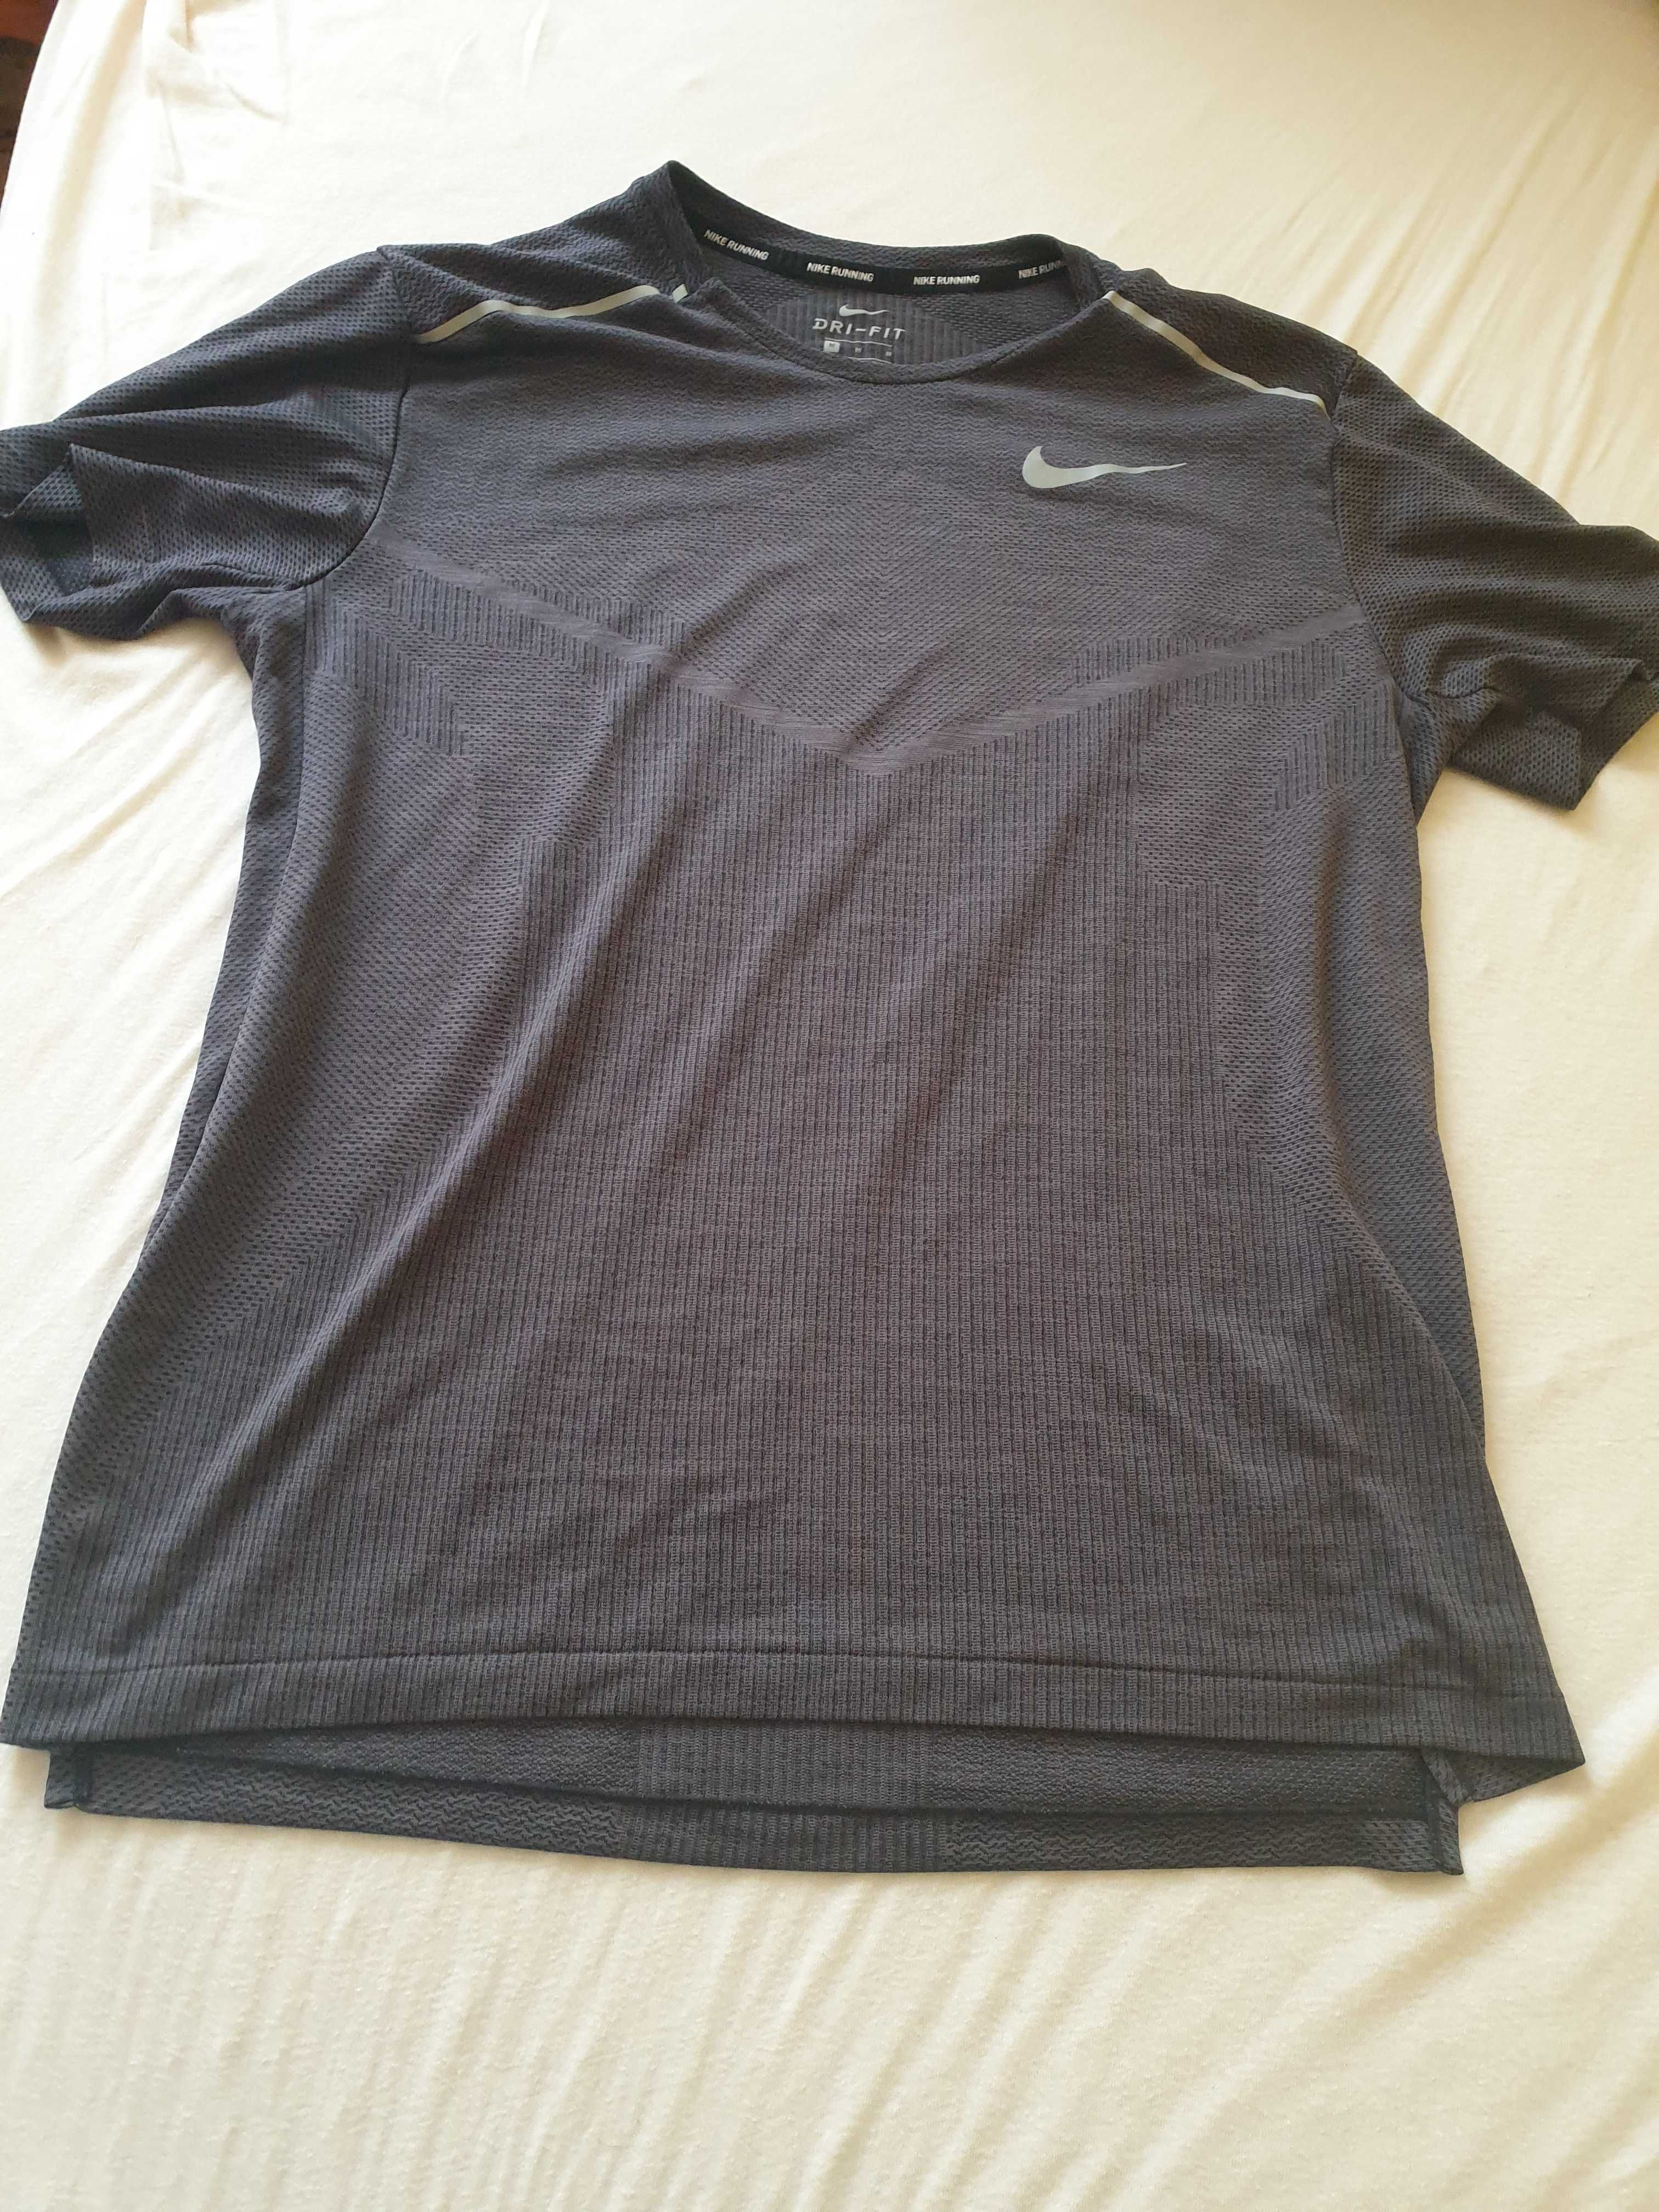 bluzka koszulka termo nike Adidas dri fit running roznie rozmiary